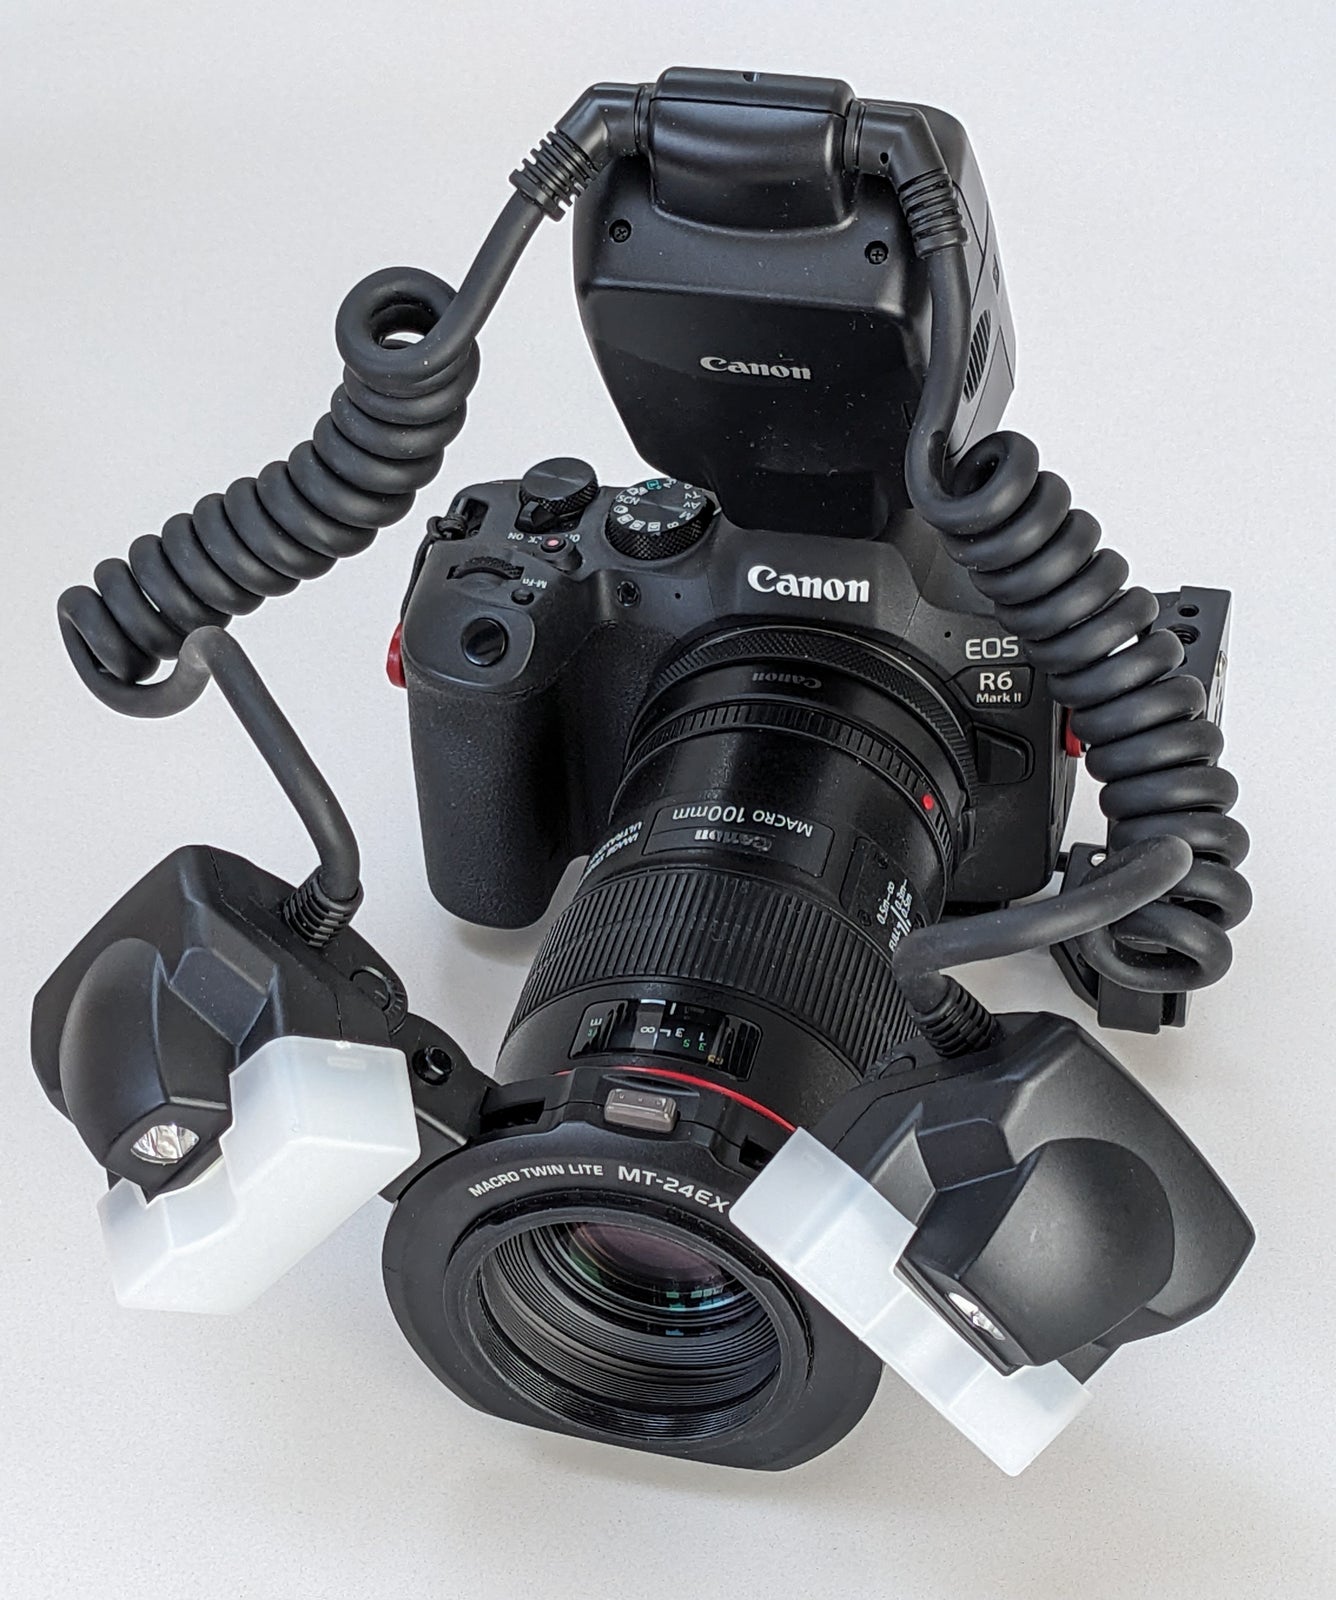 Canon makro twin-flash